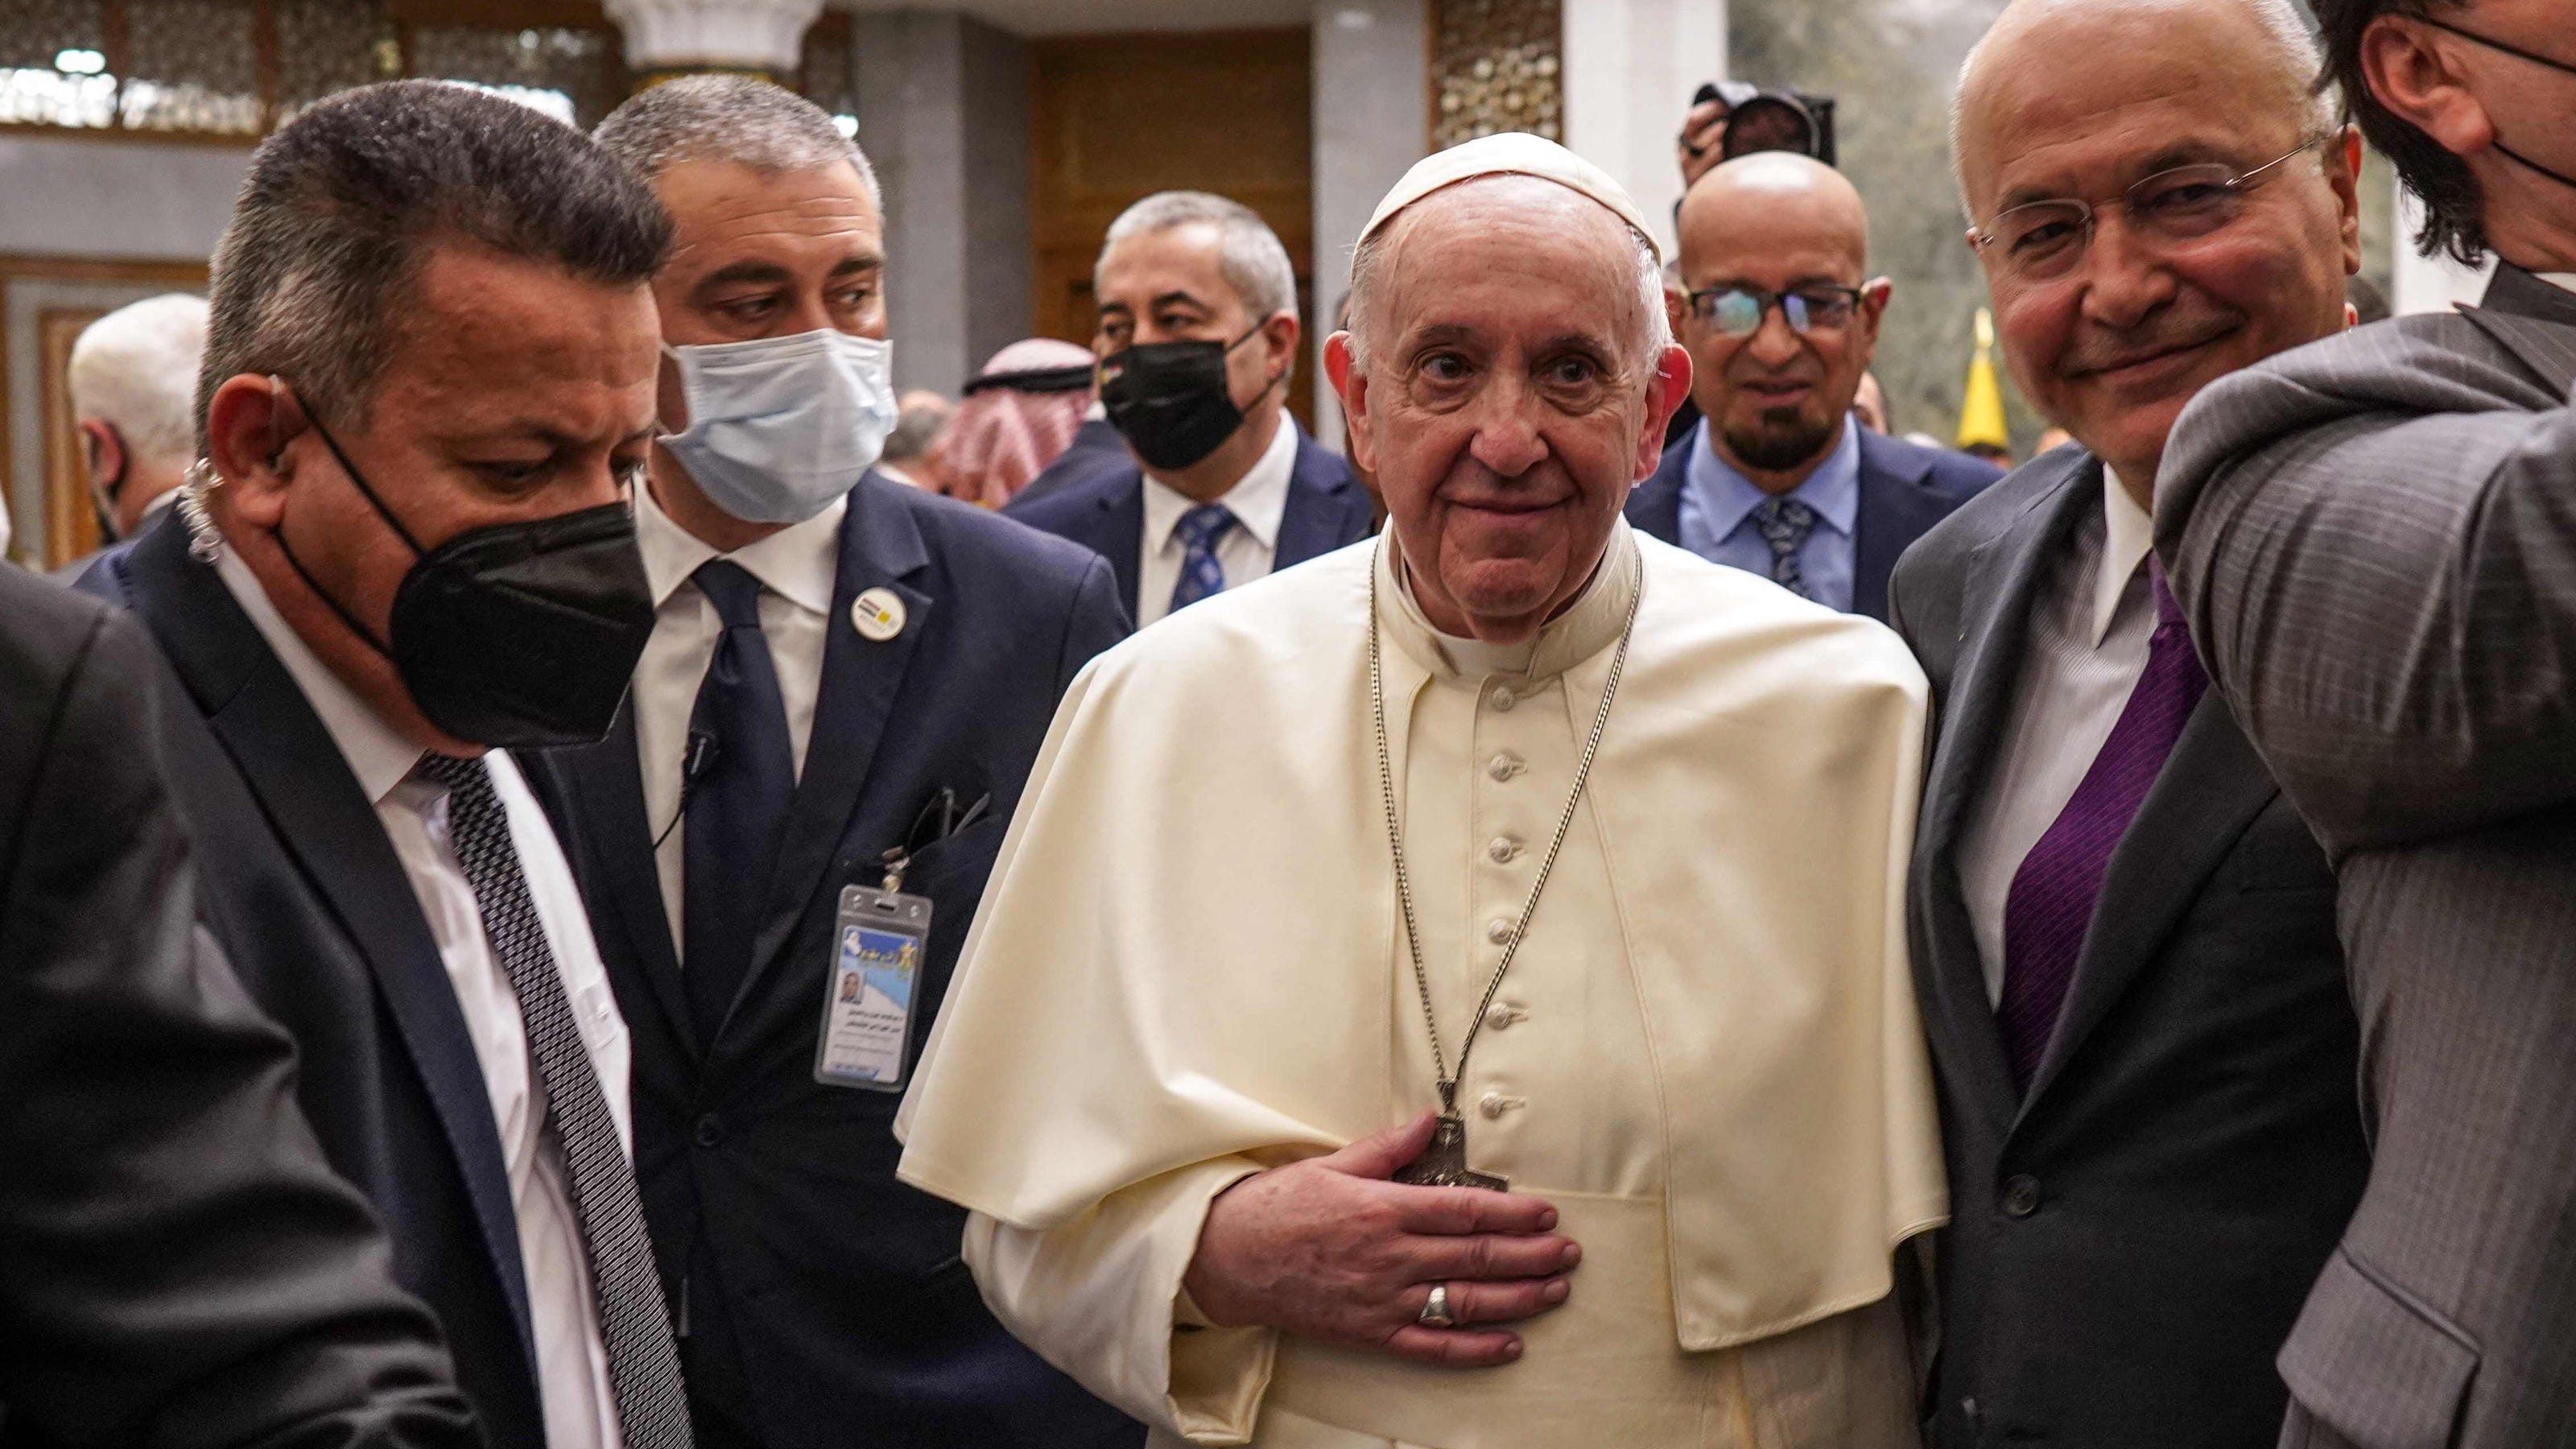 Pope Francis and Grand Ayatollah Ali al-Sistani meet in Iraq